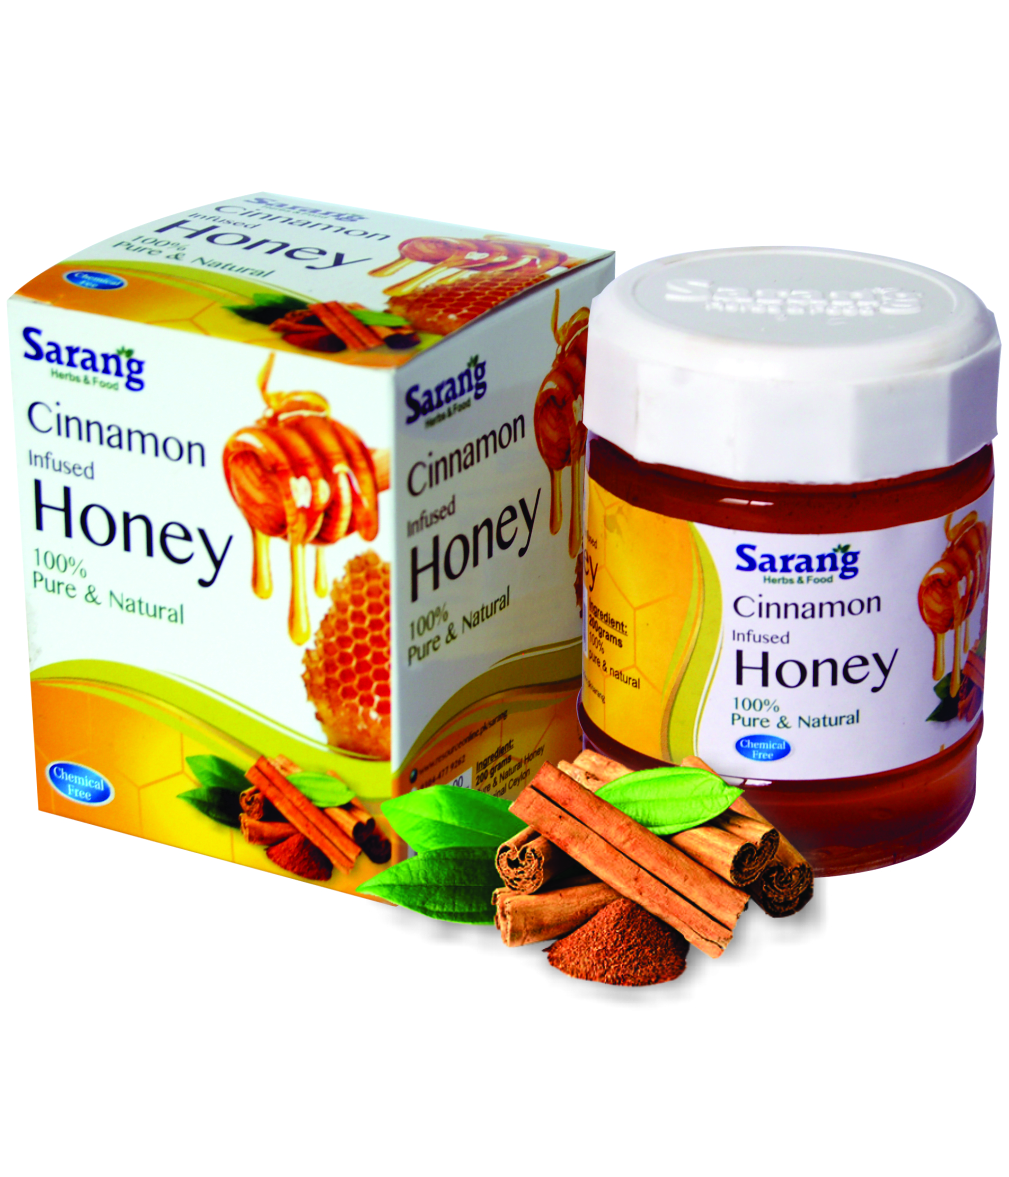 Cinnamon Infused Honey Sarang